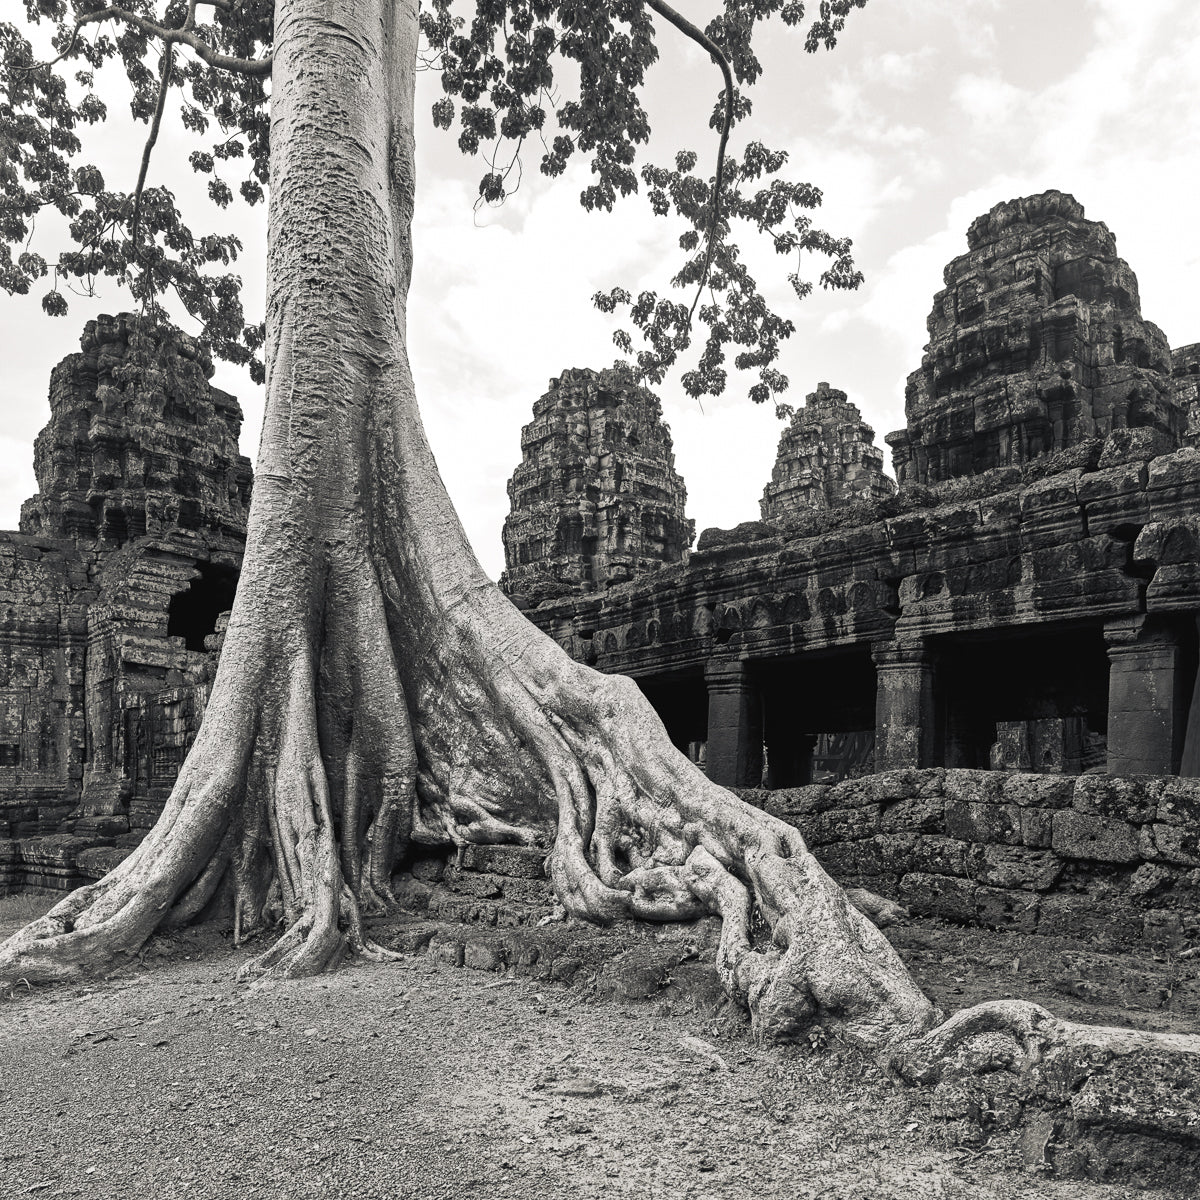 Spung Tree I, Banteay Kdei Temple, Angkor, Cambodia. 2017